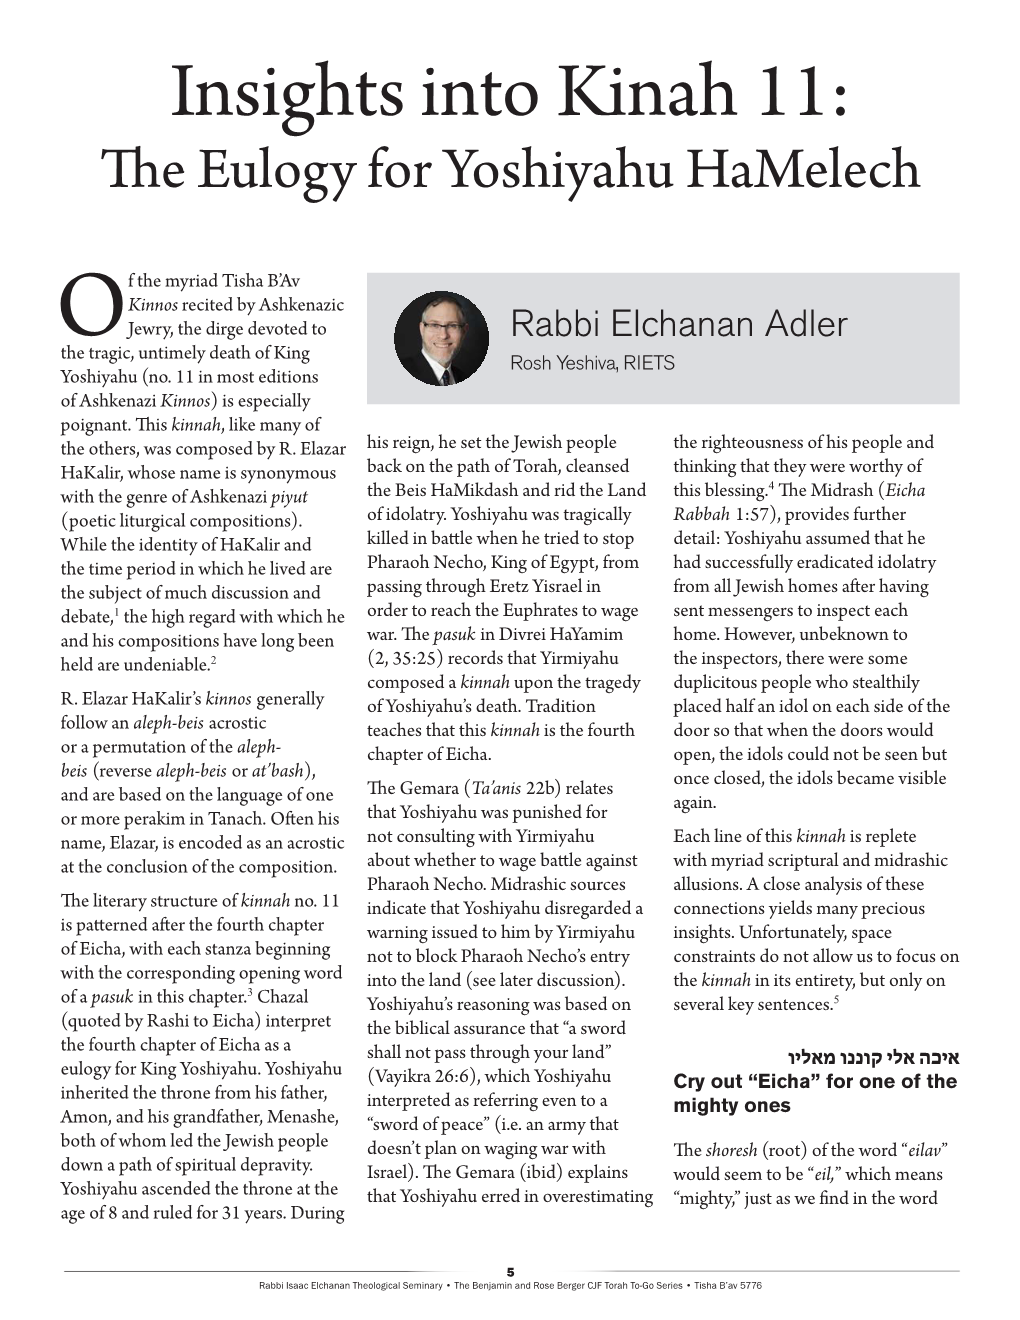 Insights Into Kinah 11: the Eulogy for Yoshiyahu Hamelech